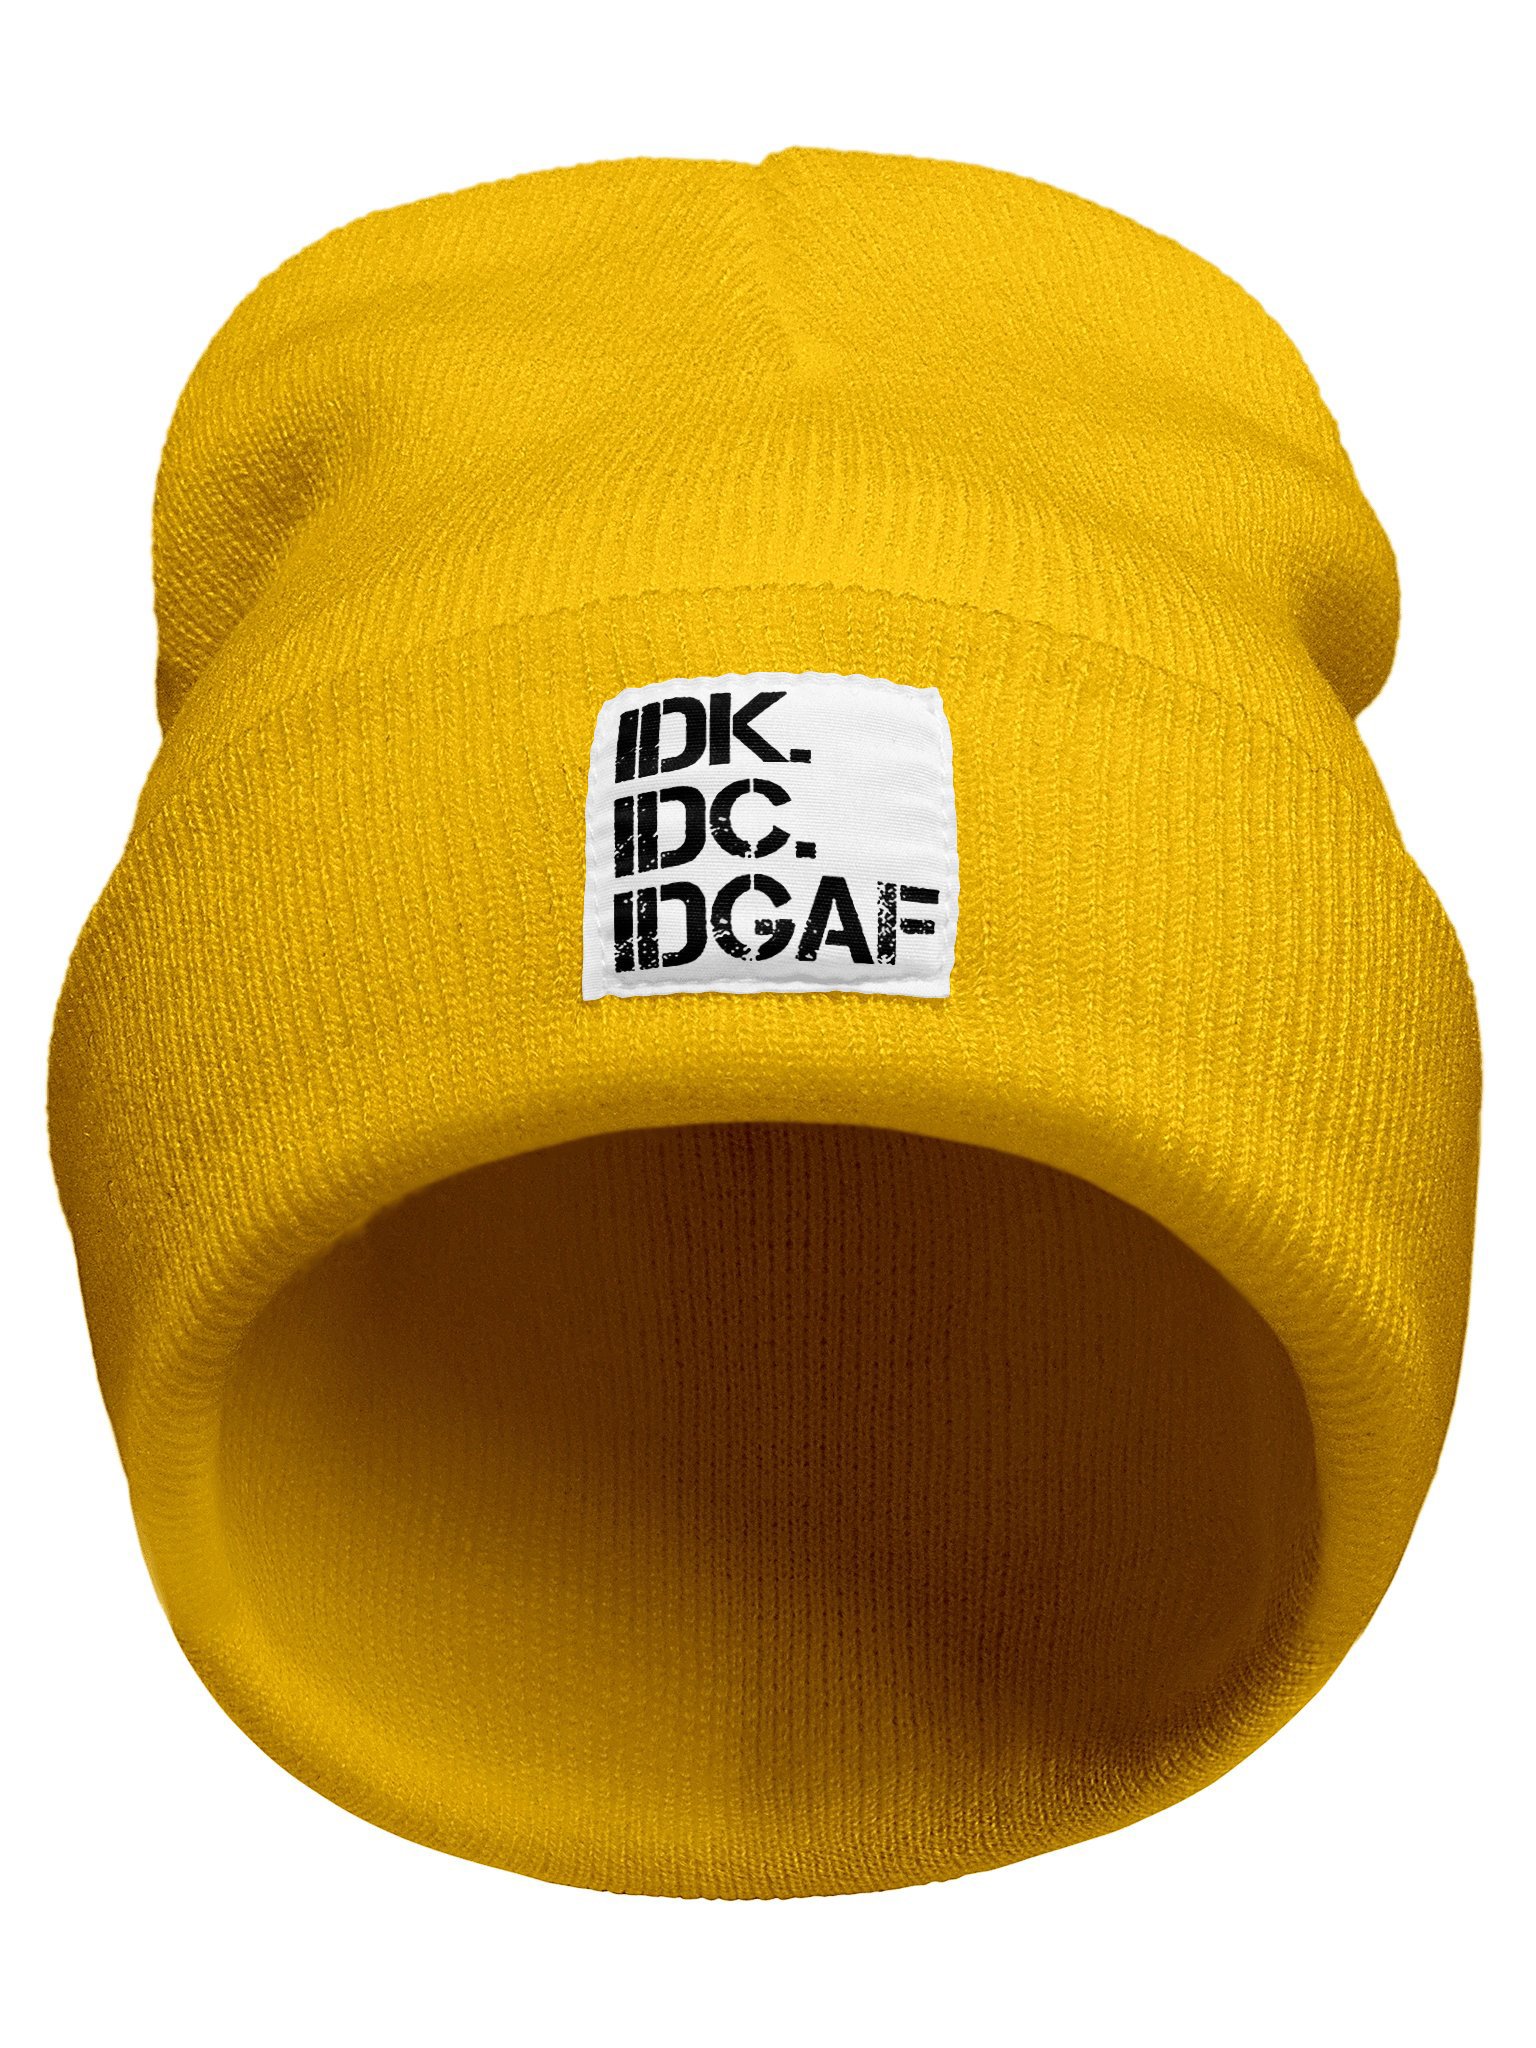 Idk Idc Idgaf Funny Letters Beanie Hat